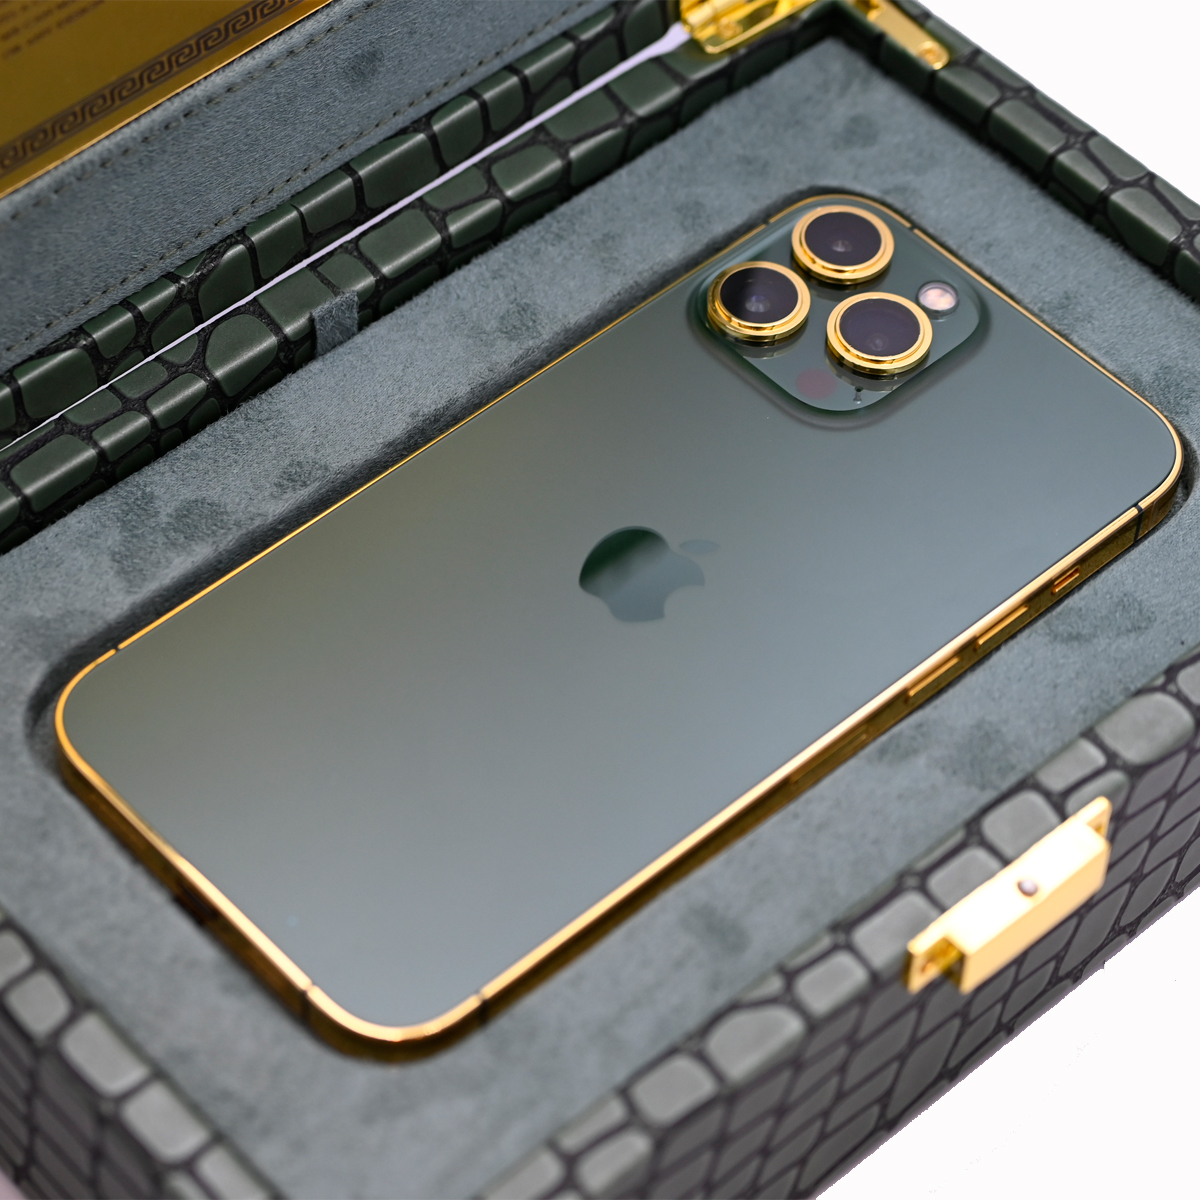 Caviar Luxury Customized 24k Gold Frame iPhone 13 Pro Max - Midnight Green 512GB